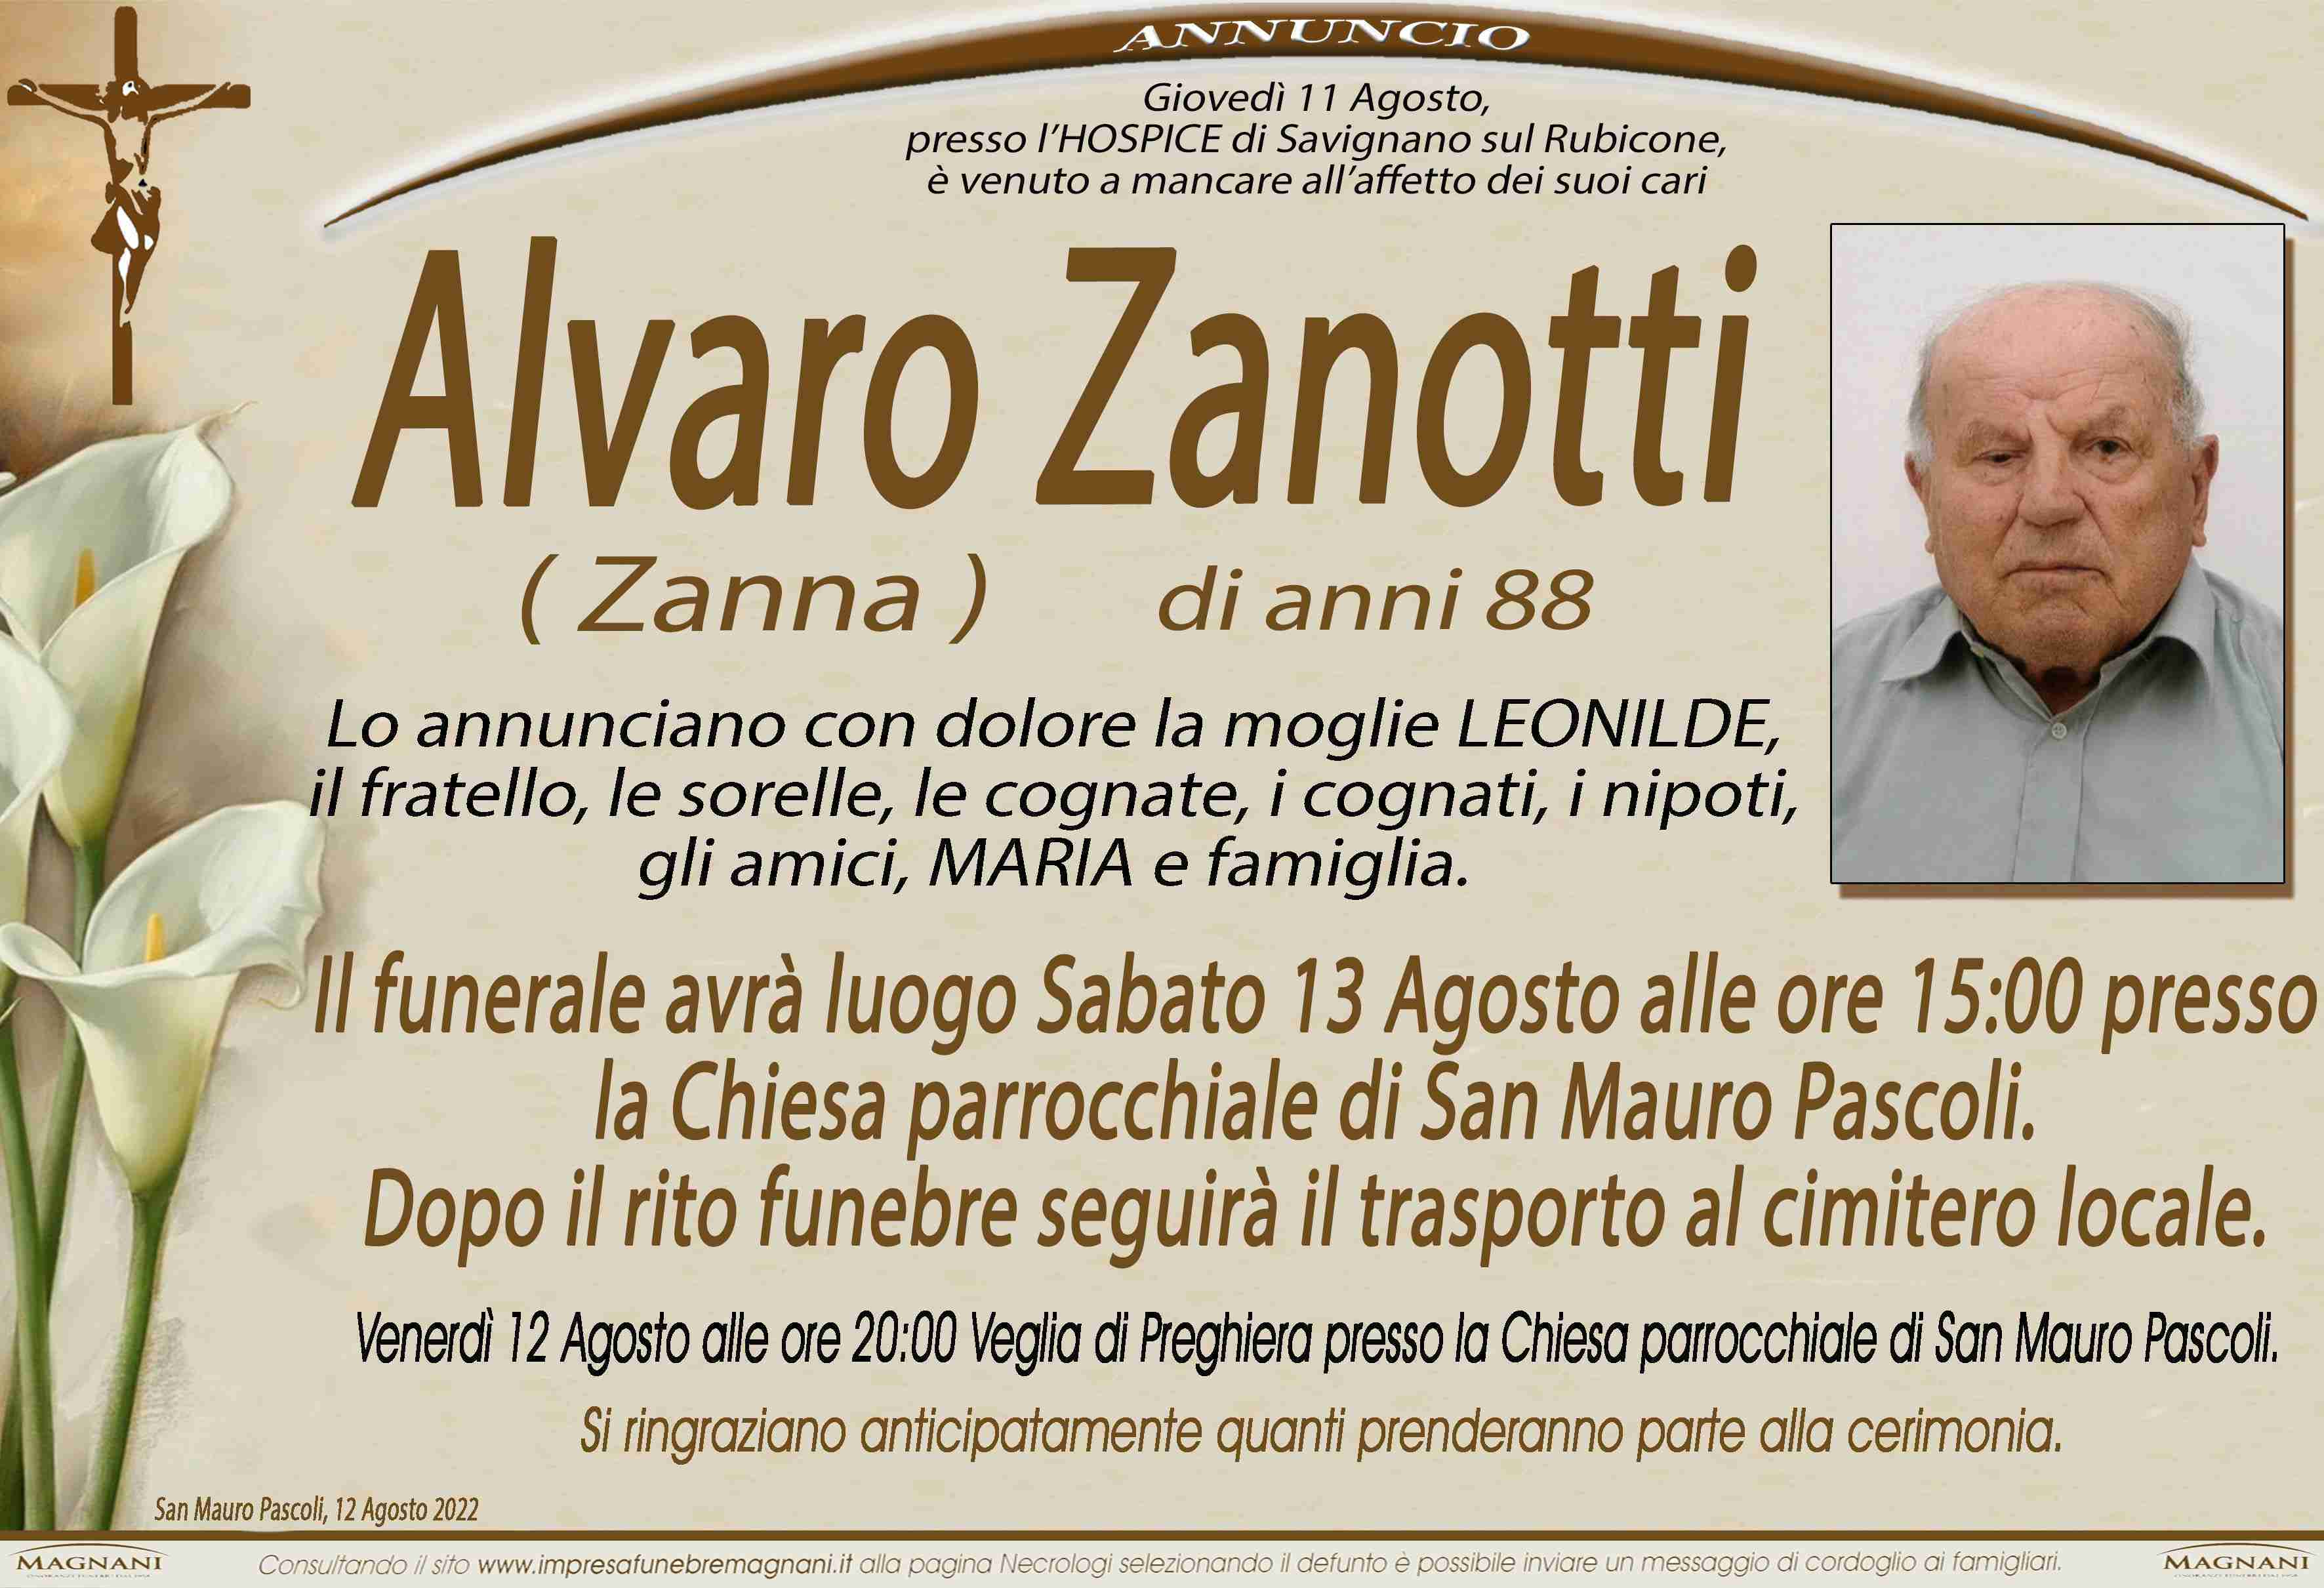 Alvaro Zanotti